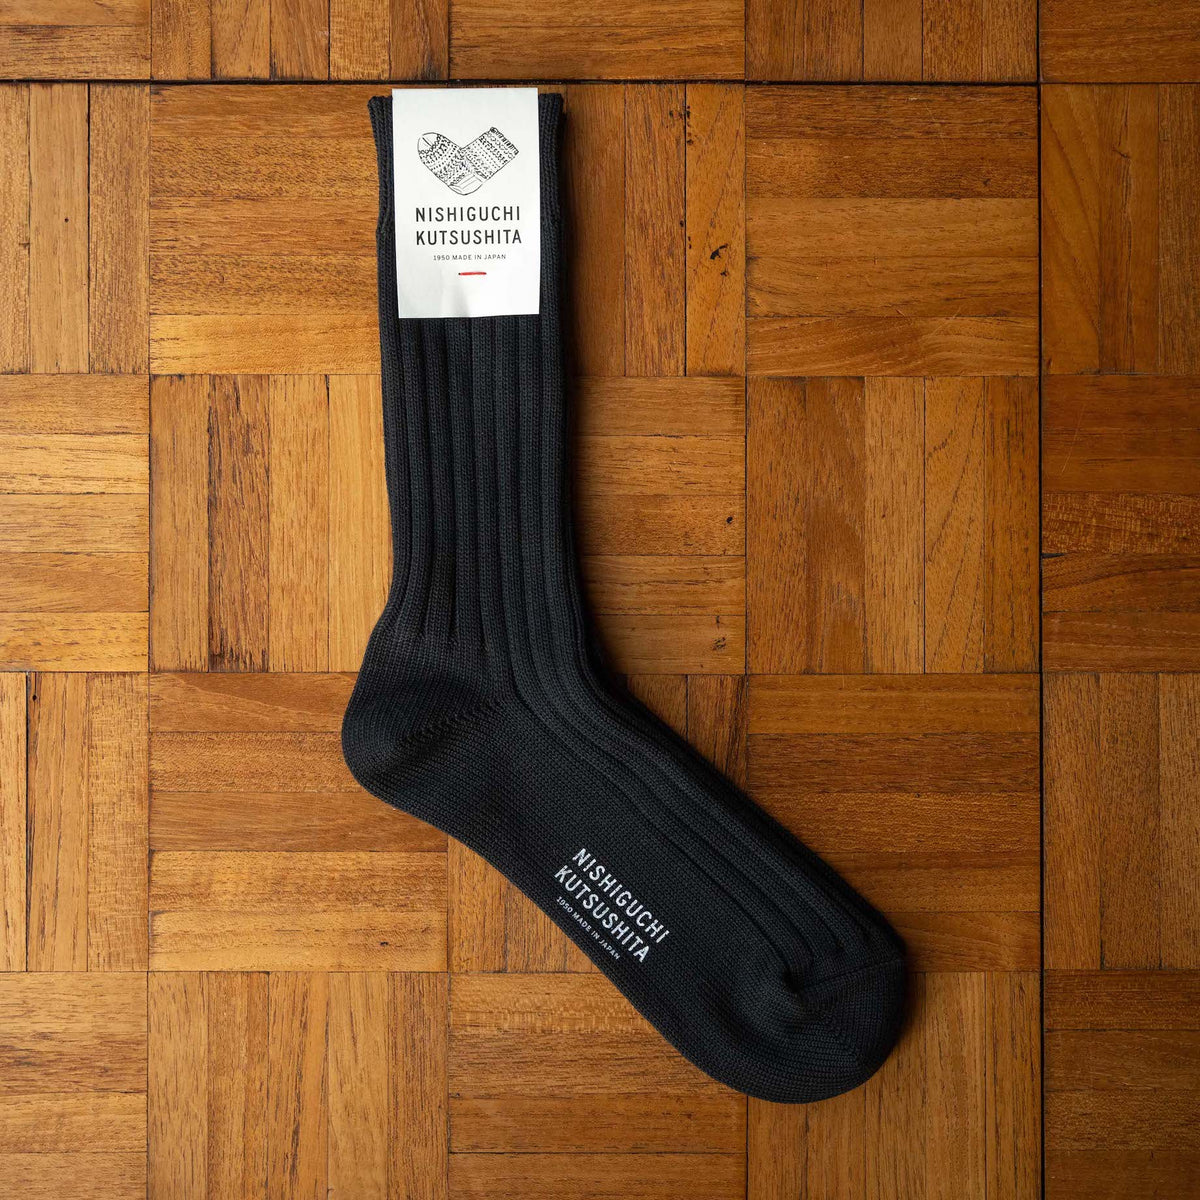 Nishiguchi Kutsushita Egyptian Cotton Socks in Black colourway